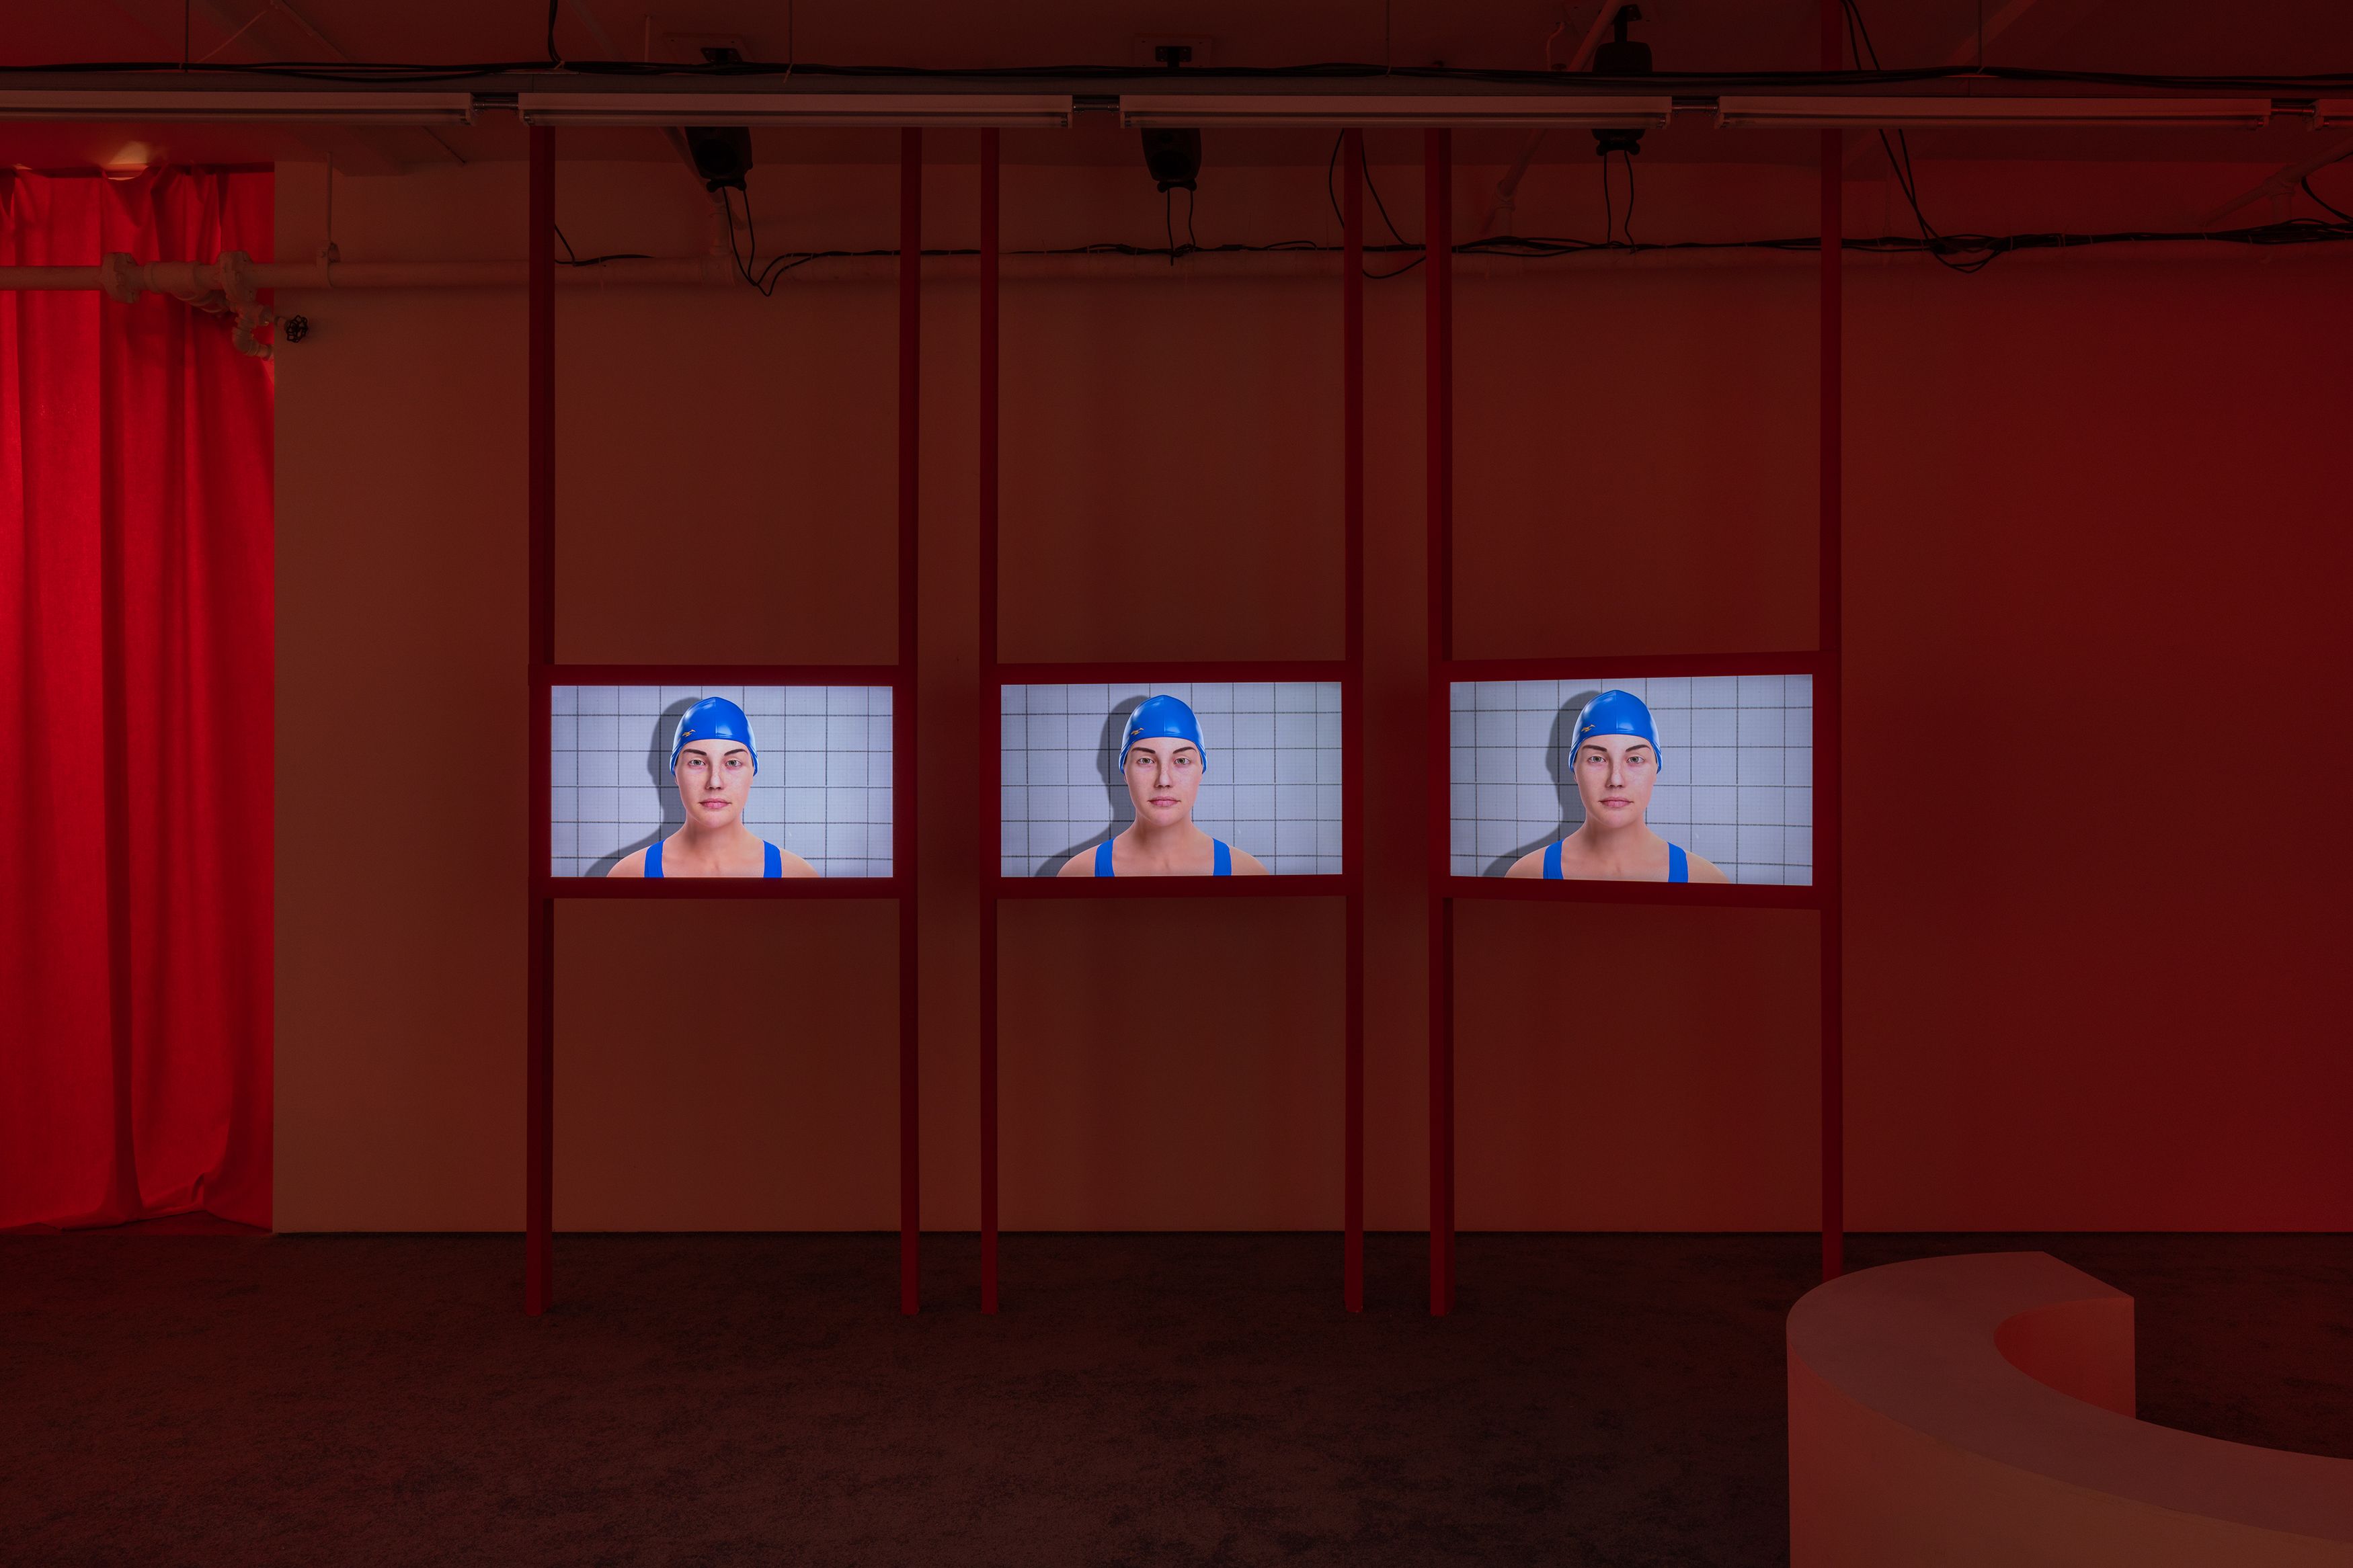 Sara Cwynar, Glass Life, 2021, installation view, Foxy Production, New York